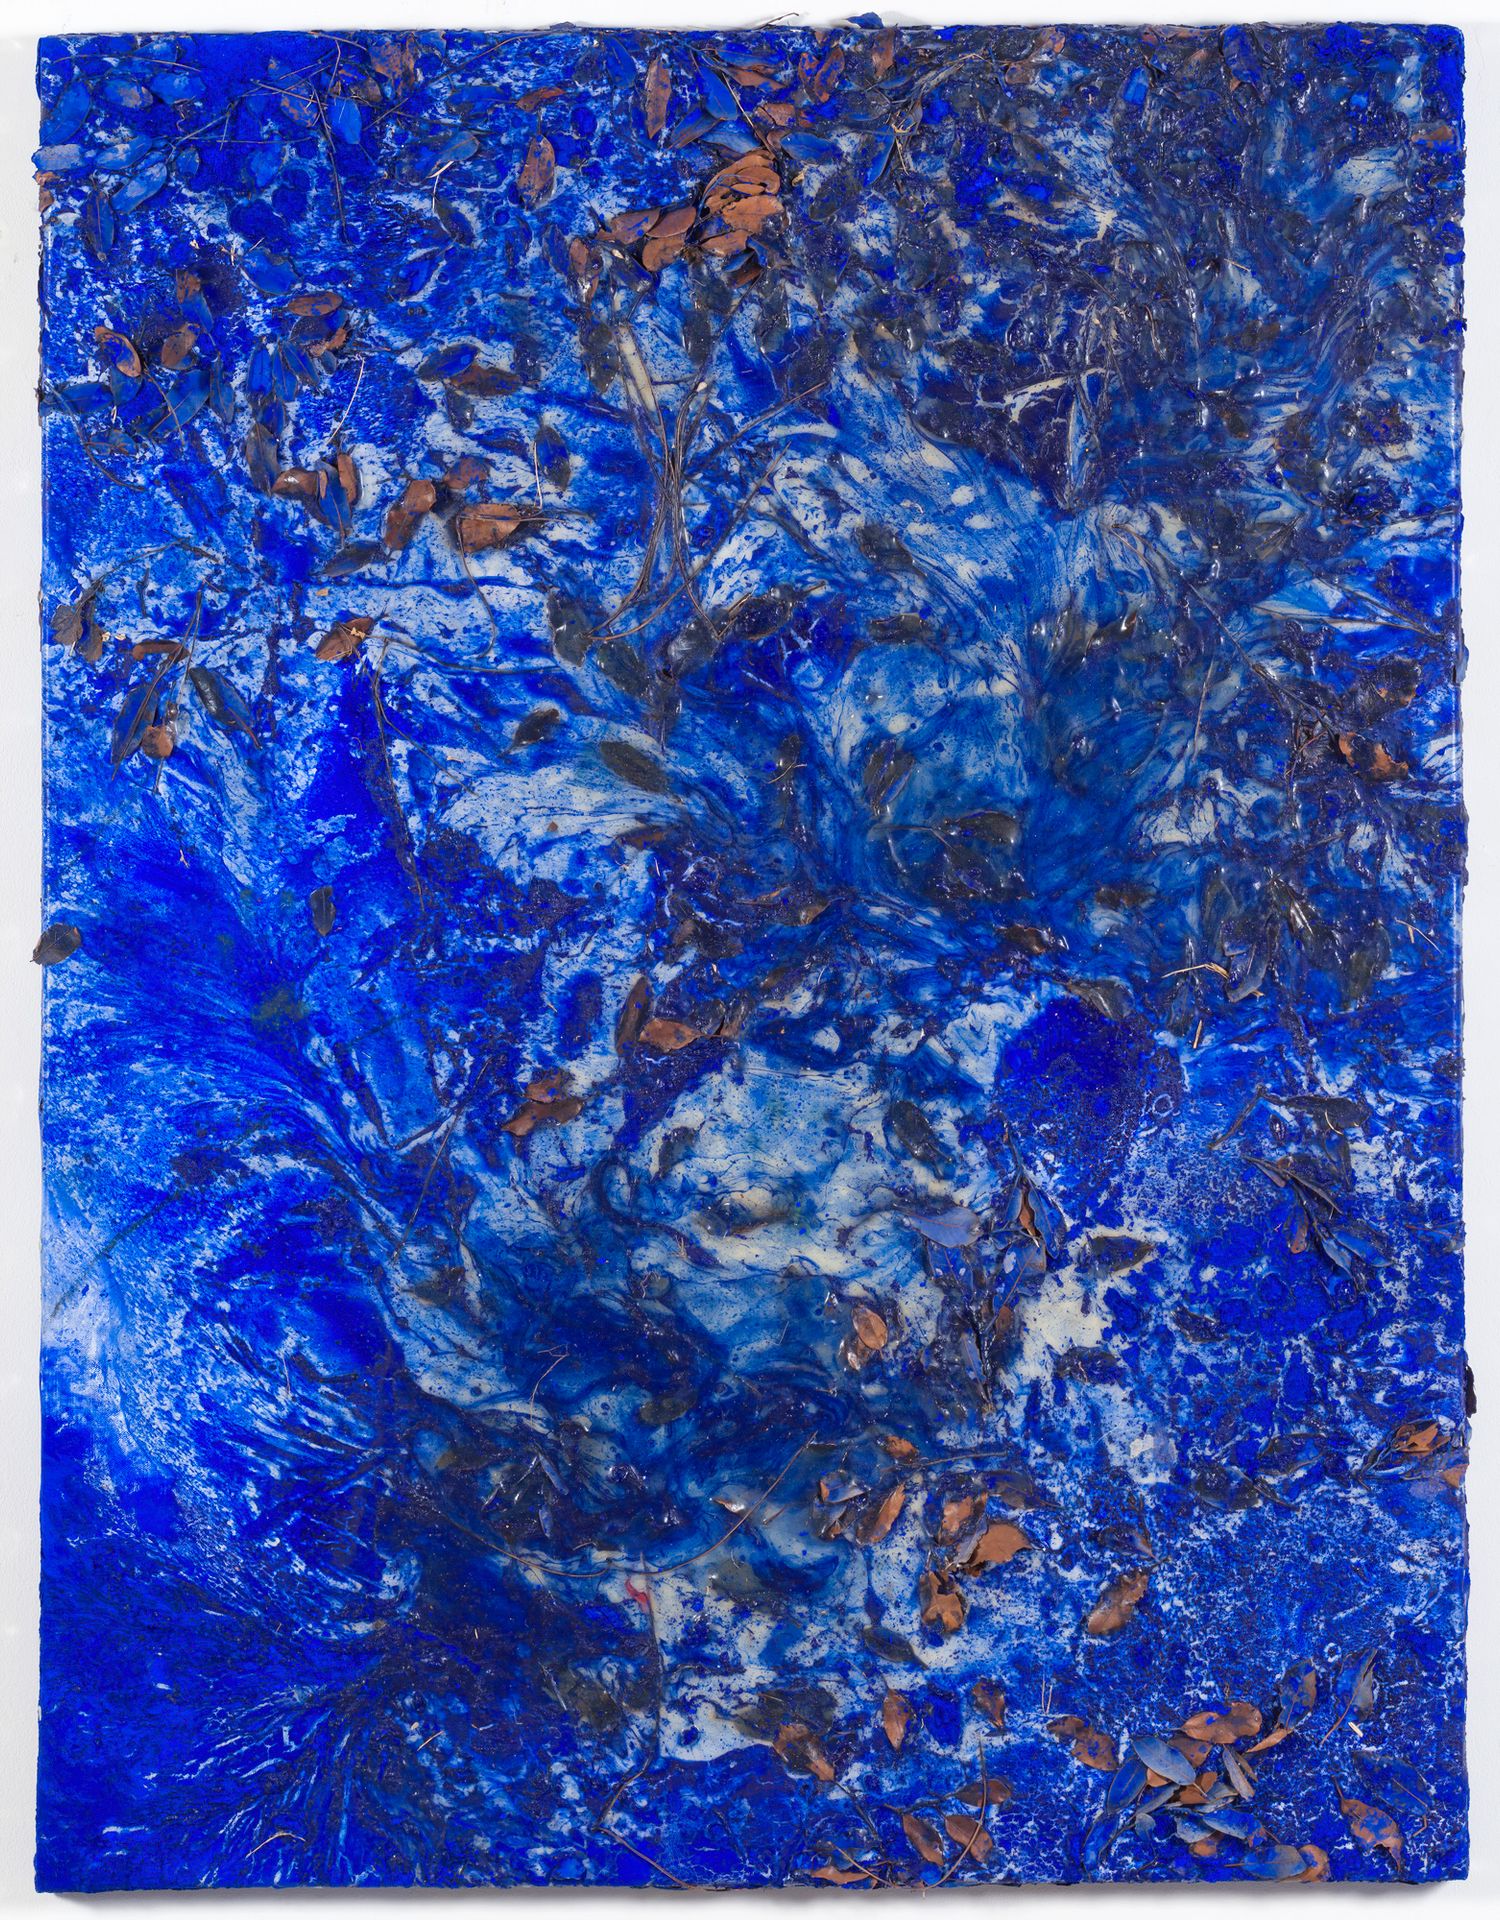 PHILIPPE PASTOR (né en 1961) AR 
蓝色的组成 
2018

画布上镶嵌蓝色颜料的叶子

镶嵌有蓝色颜料的树叶在画布上

镶嵌在画&hellip;